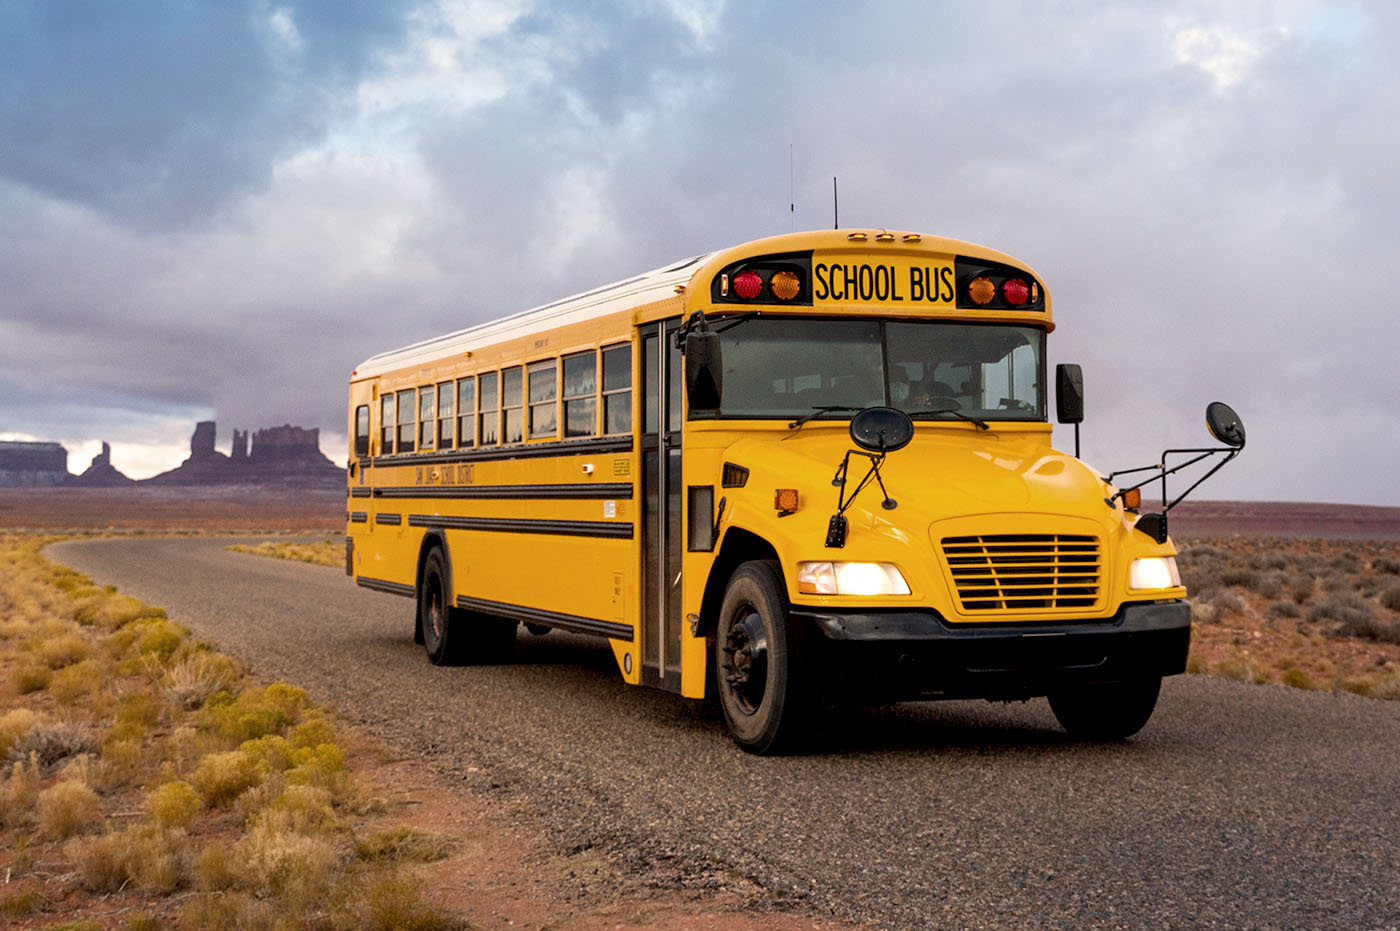 School bus driving on road